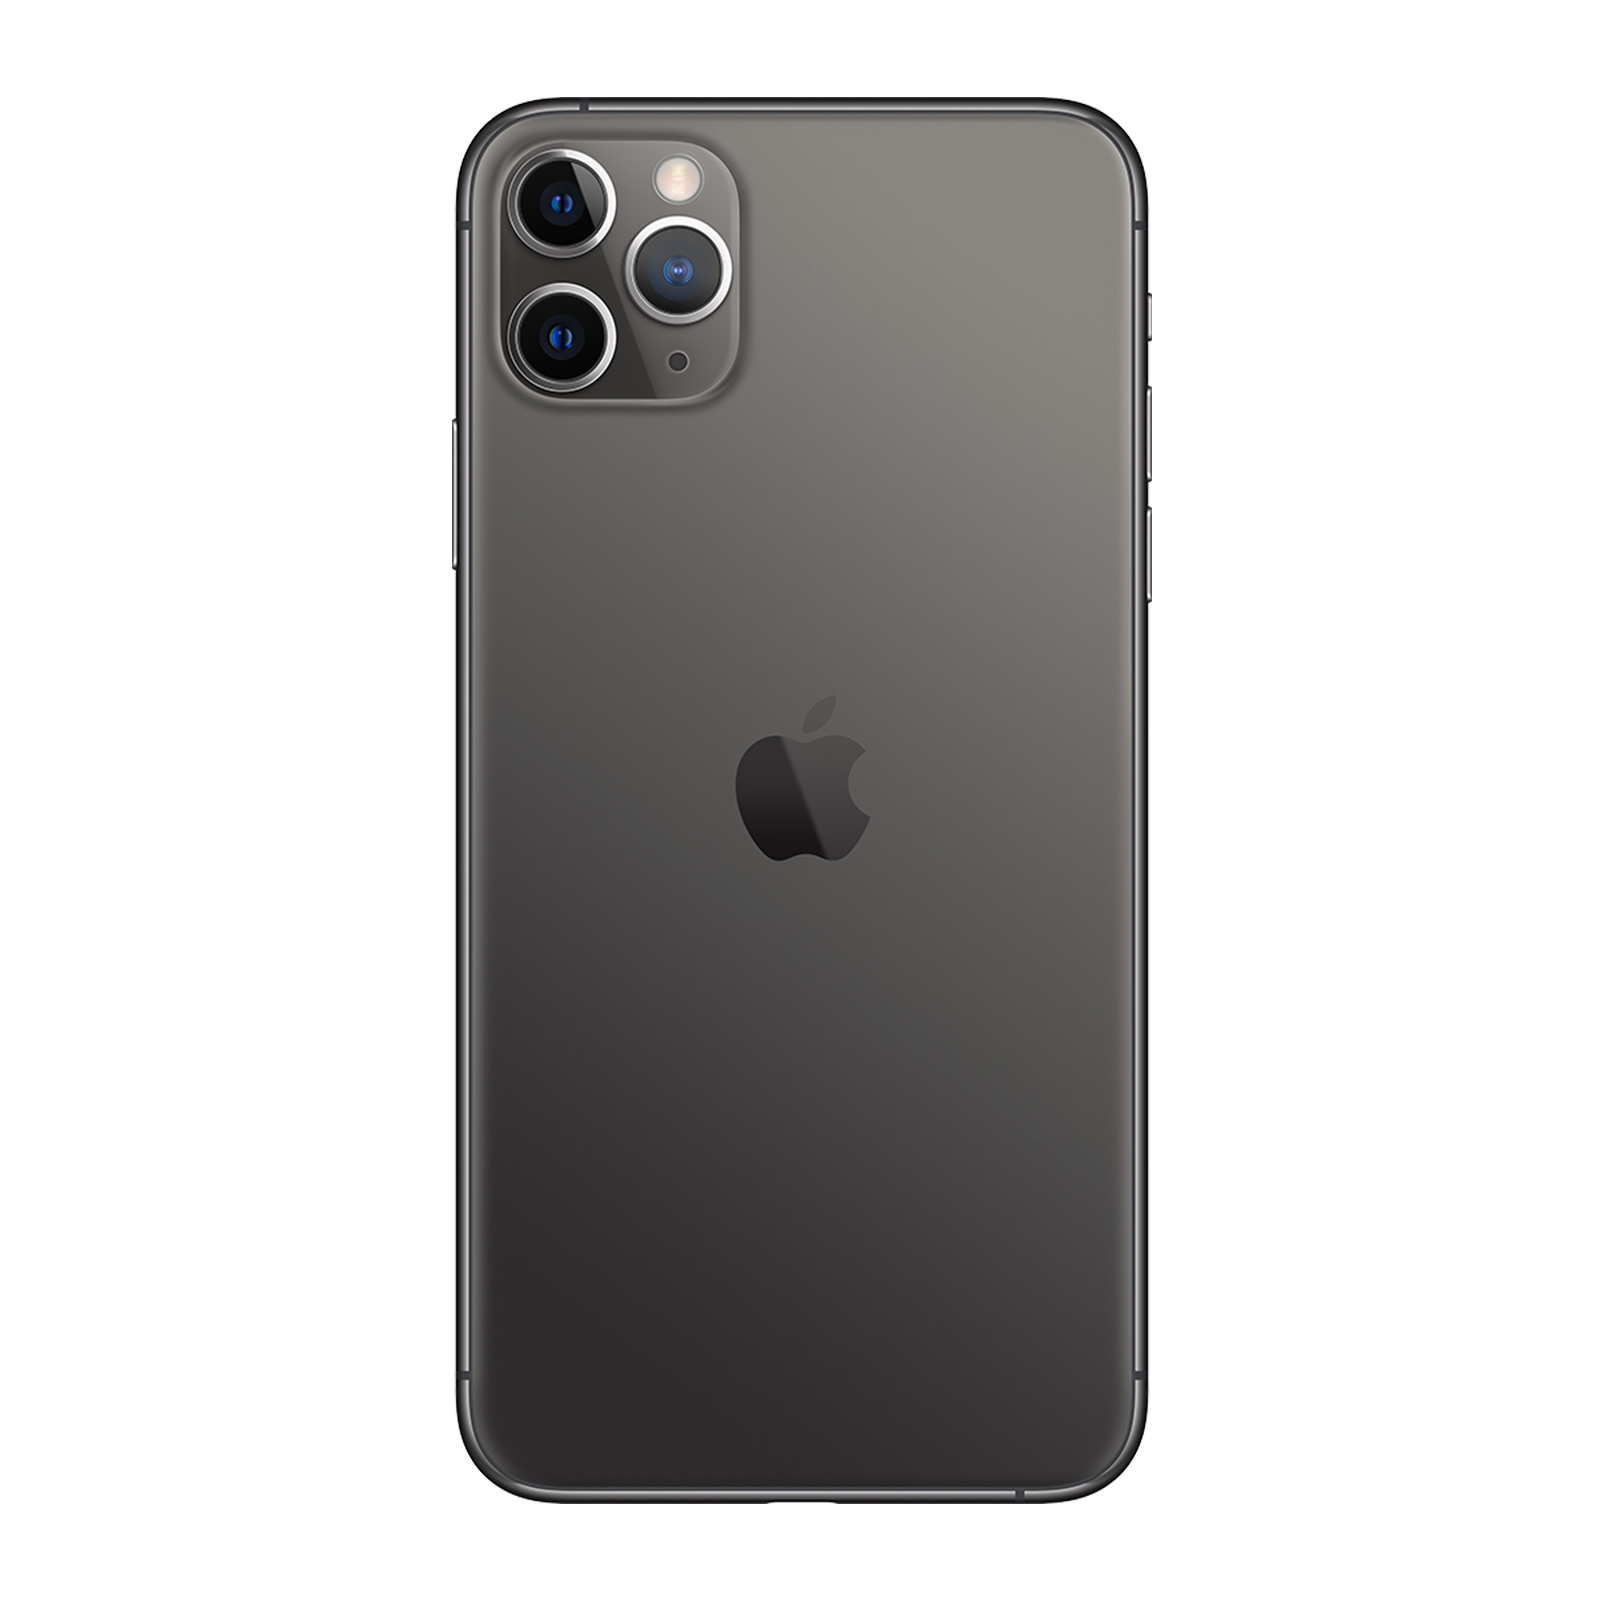 Apple iPhone 11 Pro Max 256GB Space Grey Very Good - Unlocked